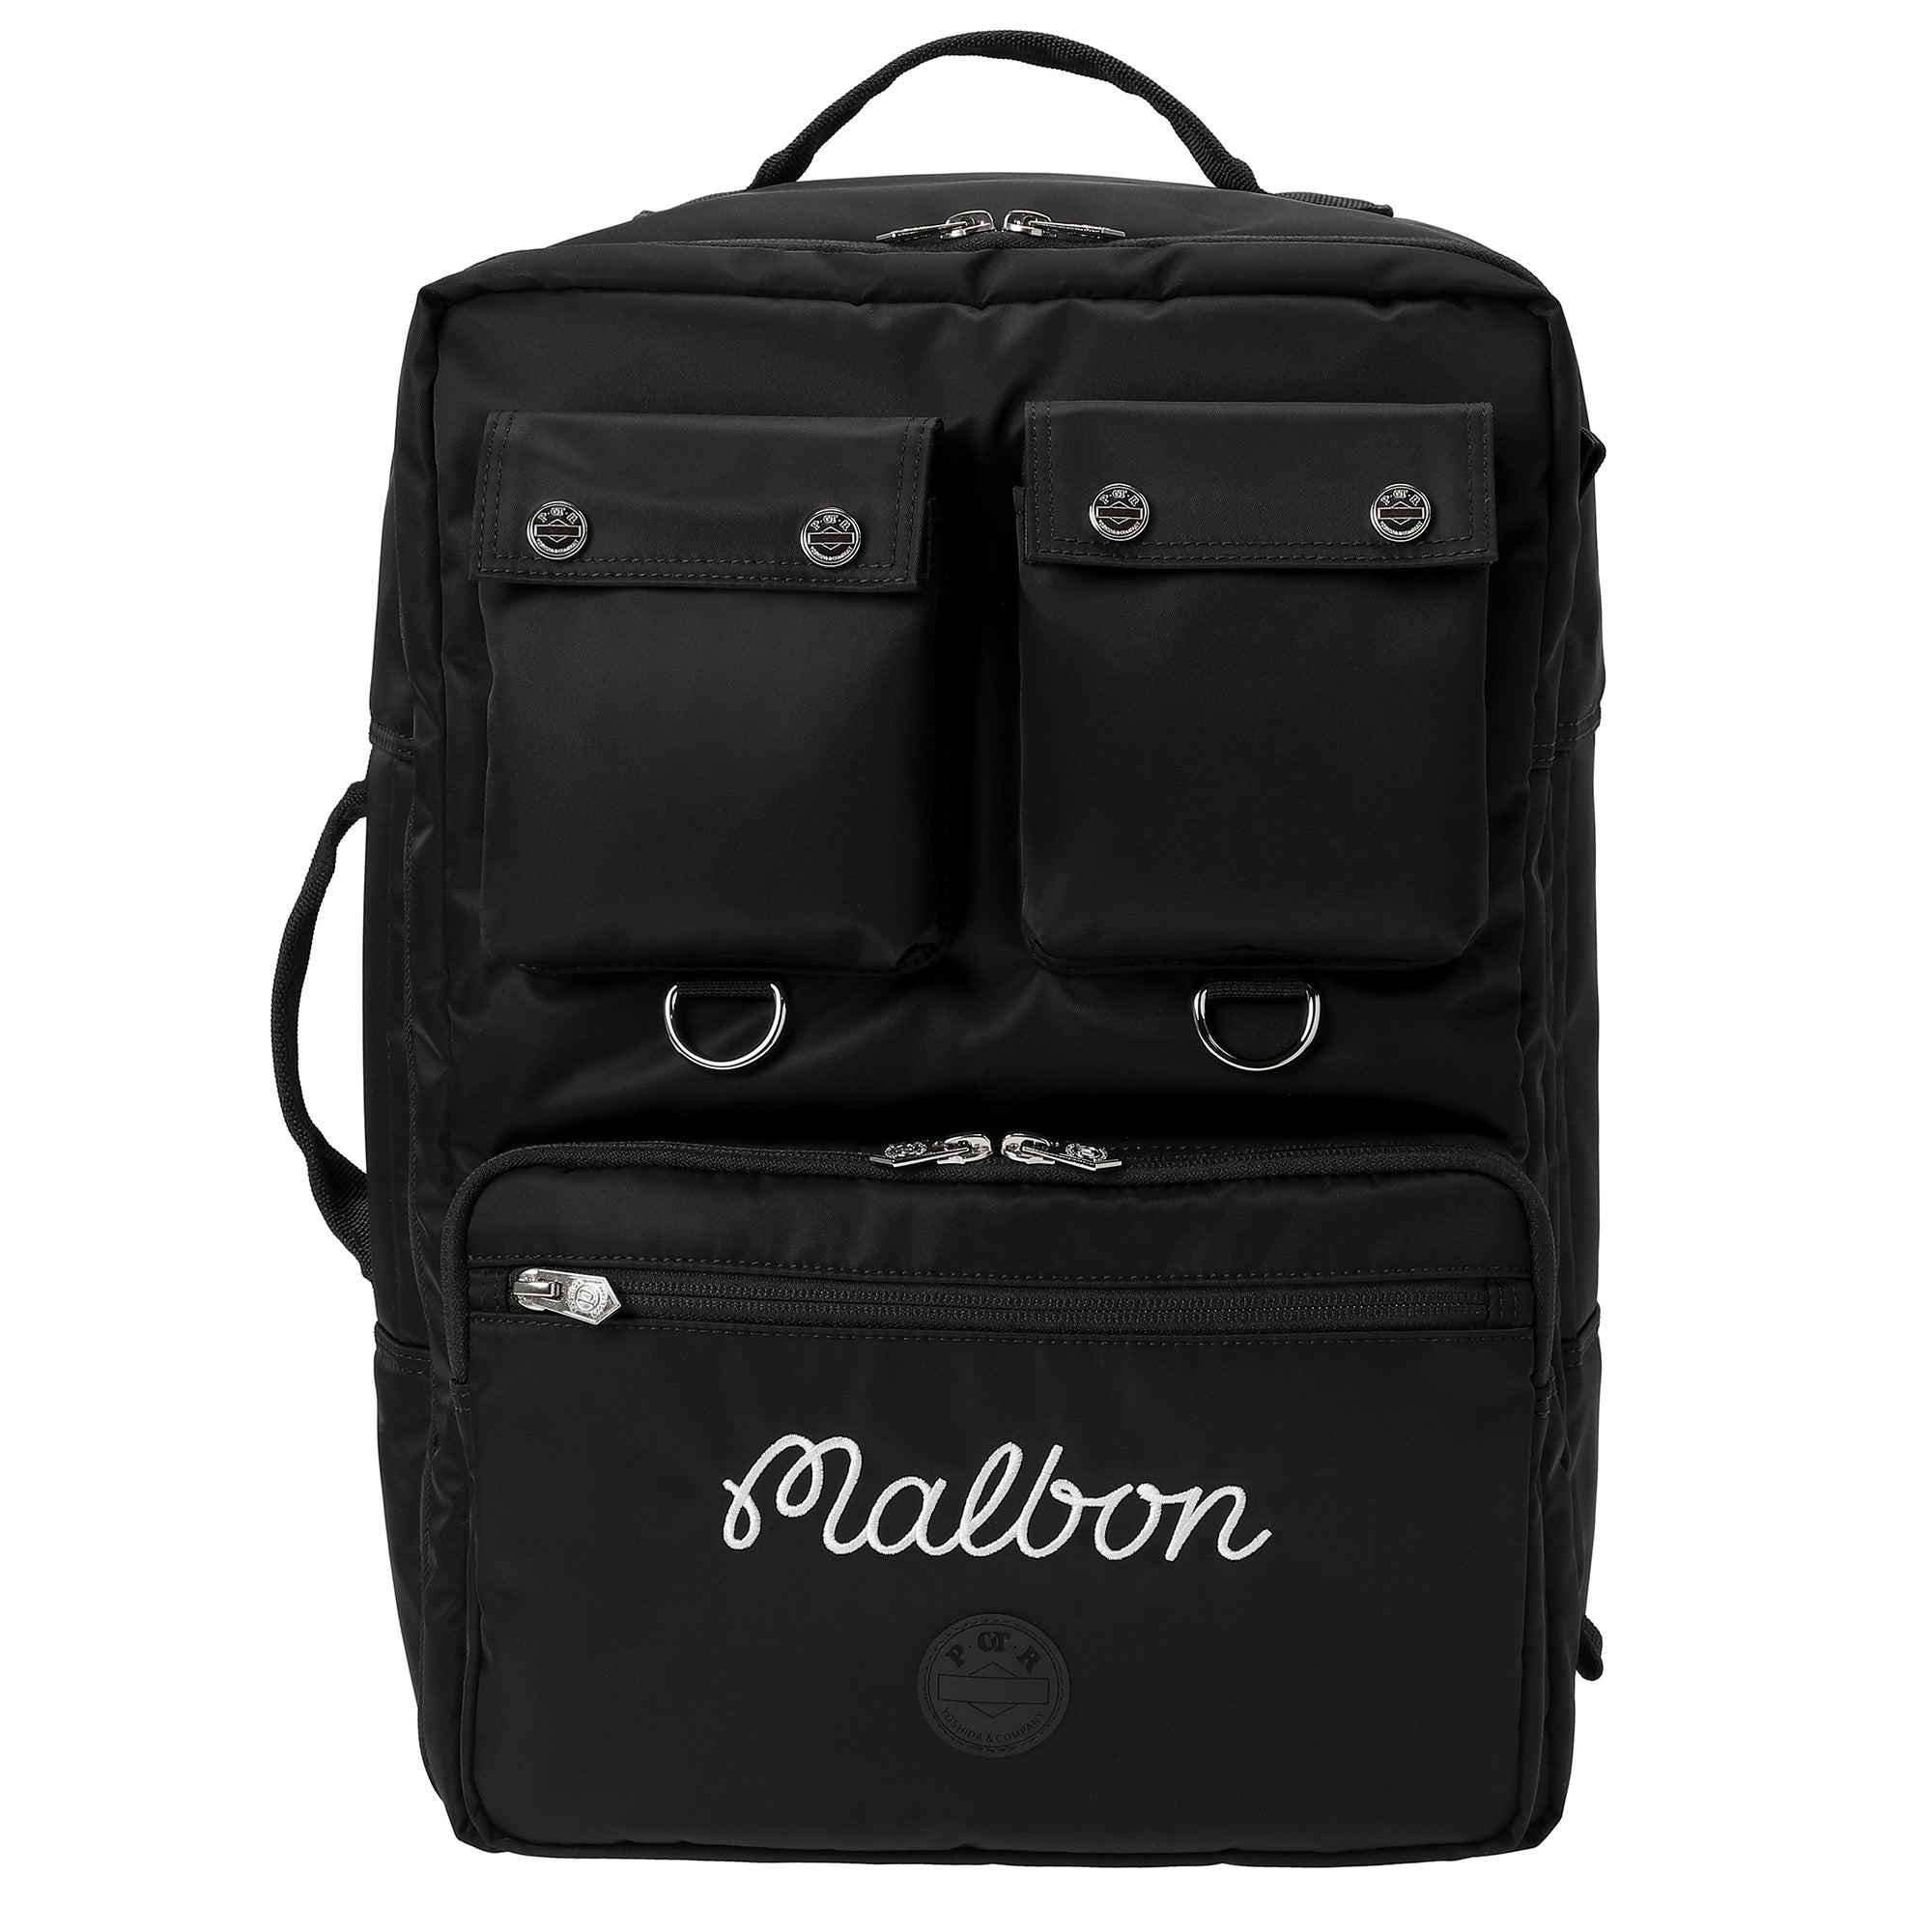 Malbon x POTR Backpack 6677945090142